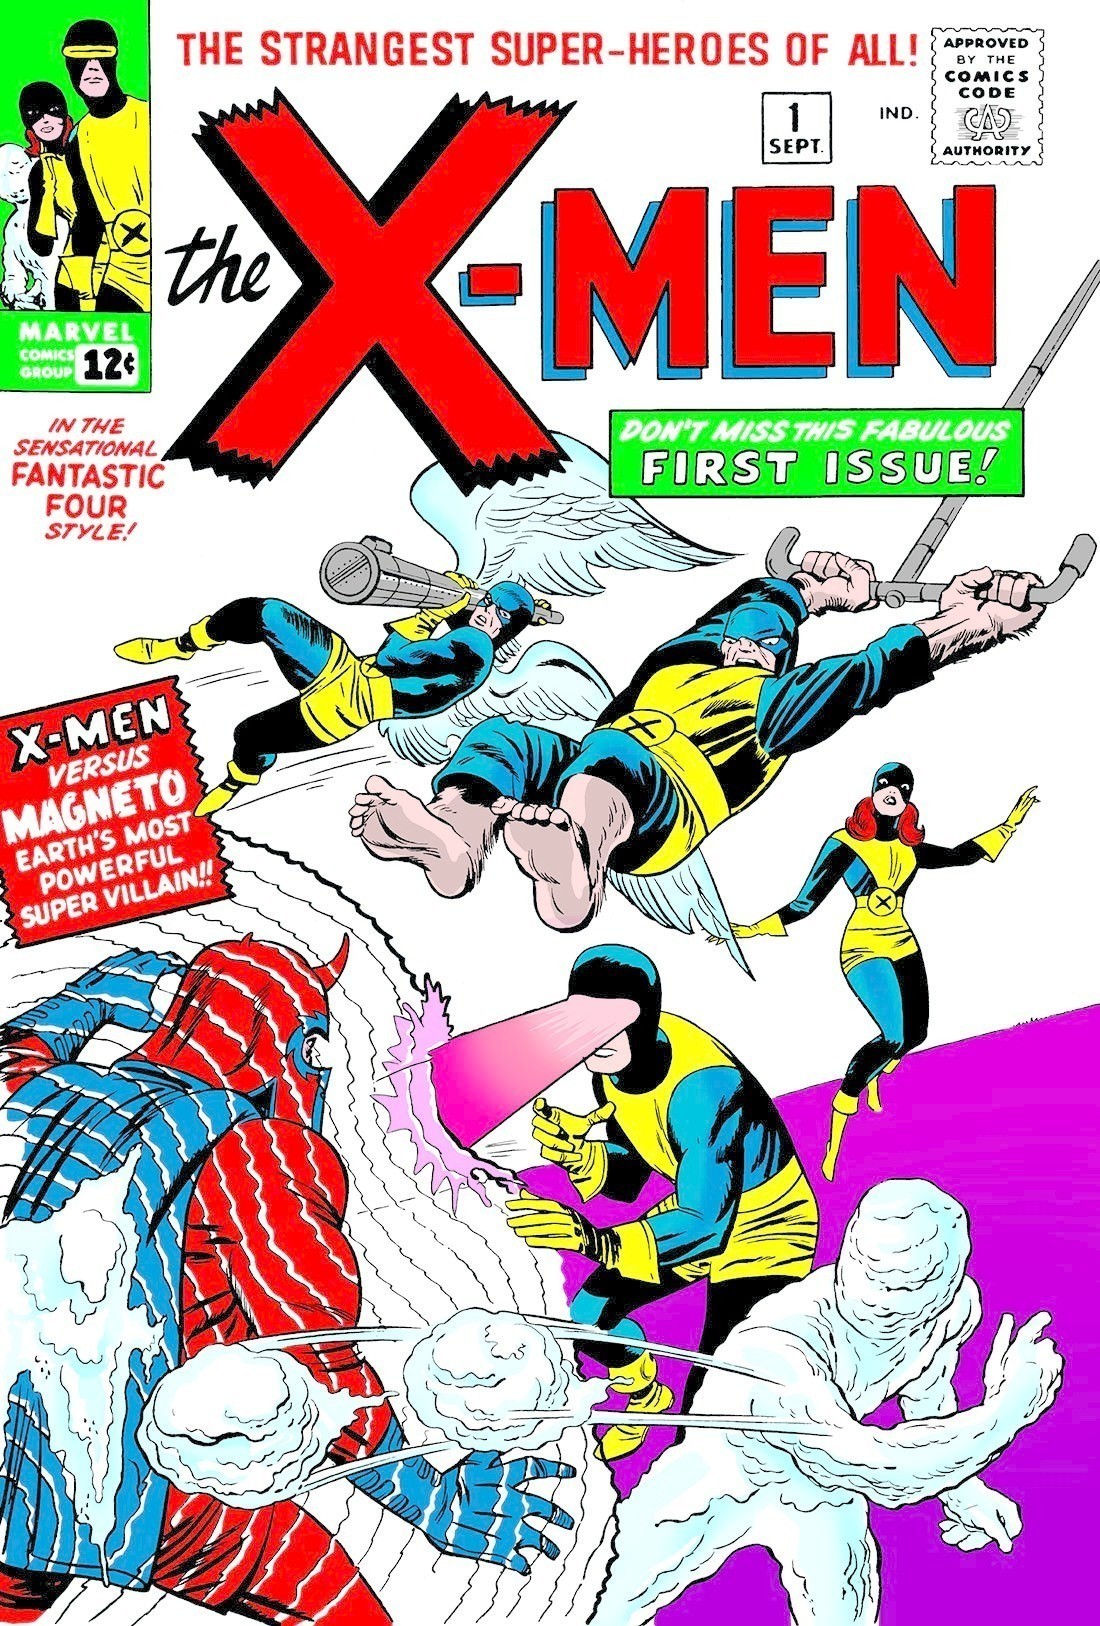 『X-MEN』＃1。